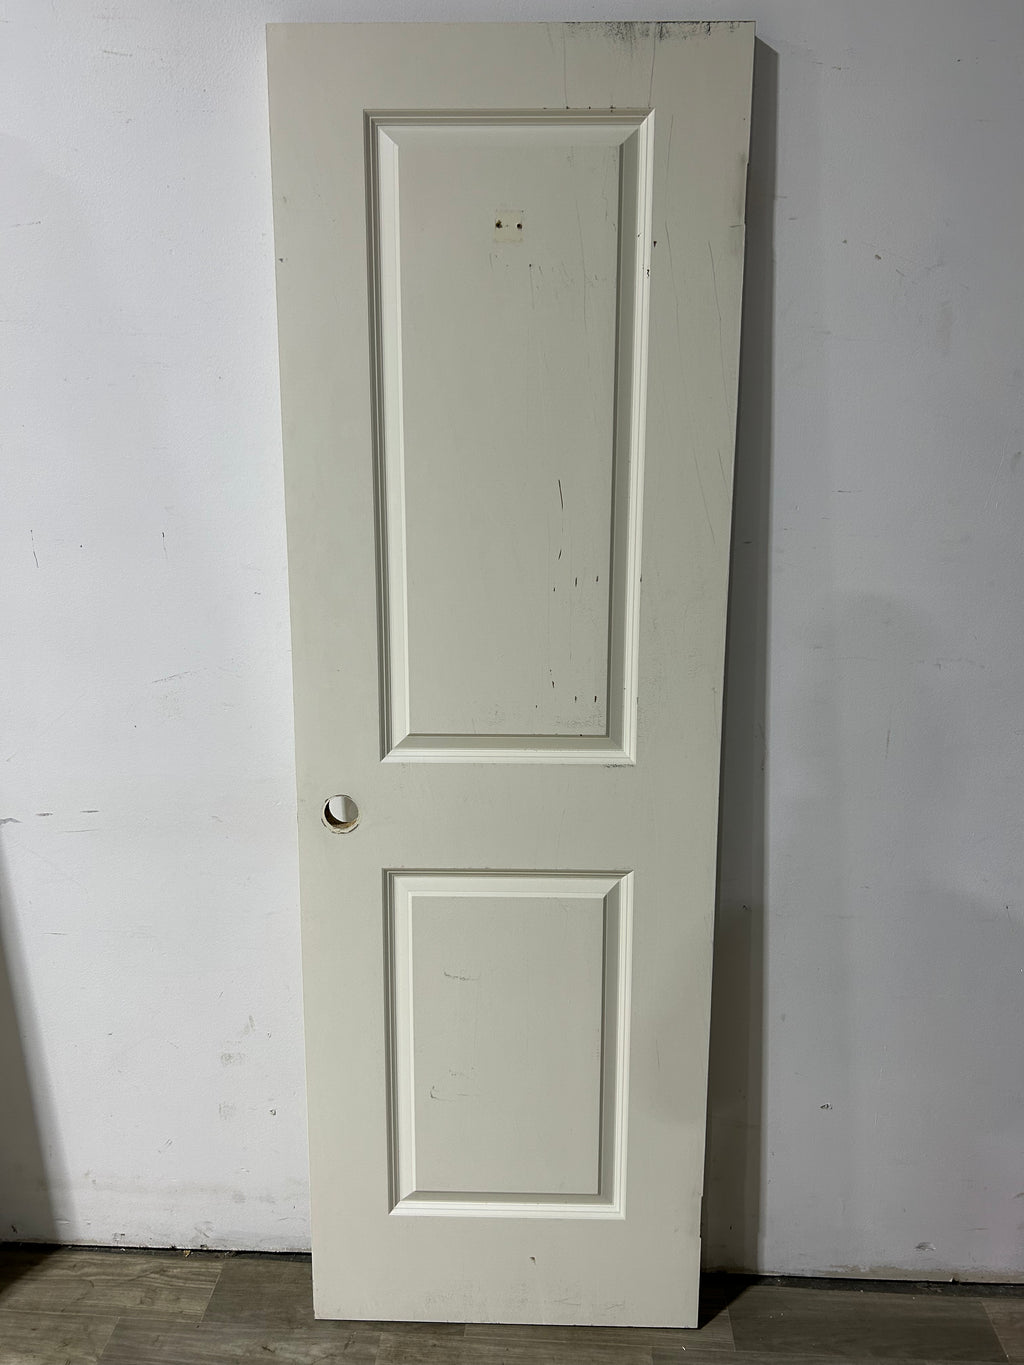 26"W x 80"H White interior door